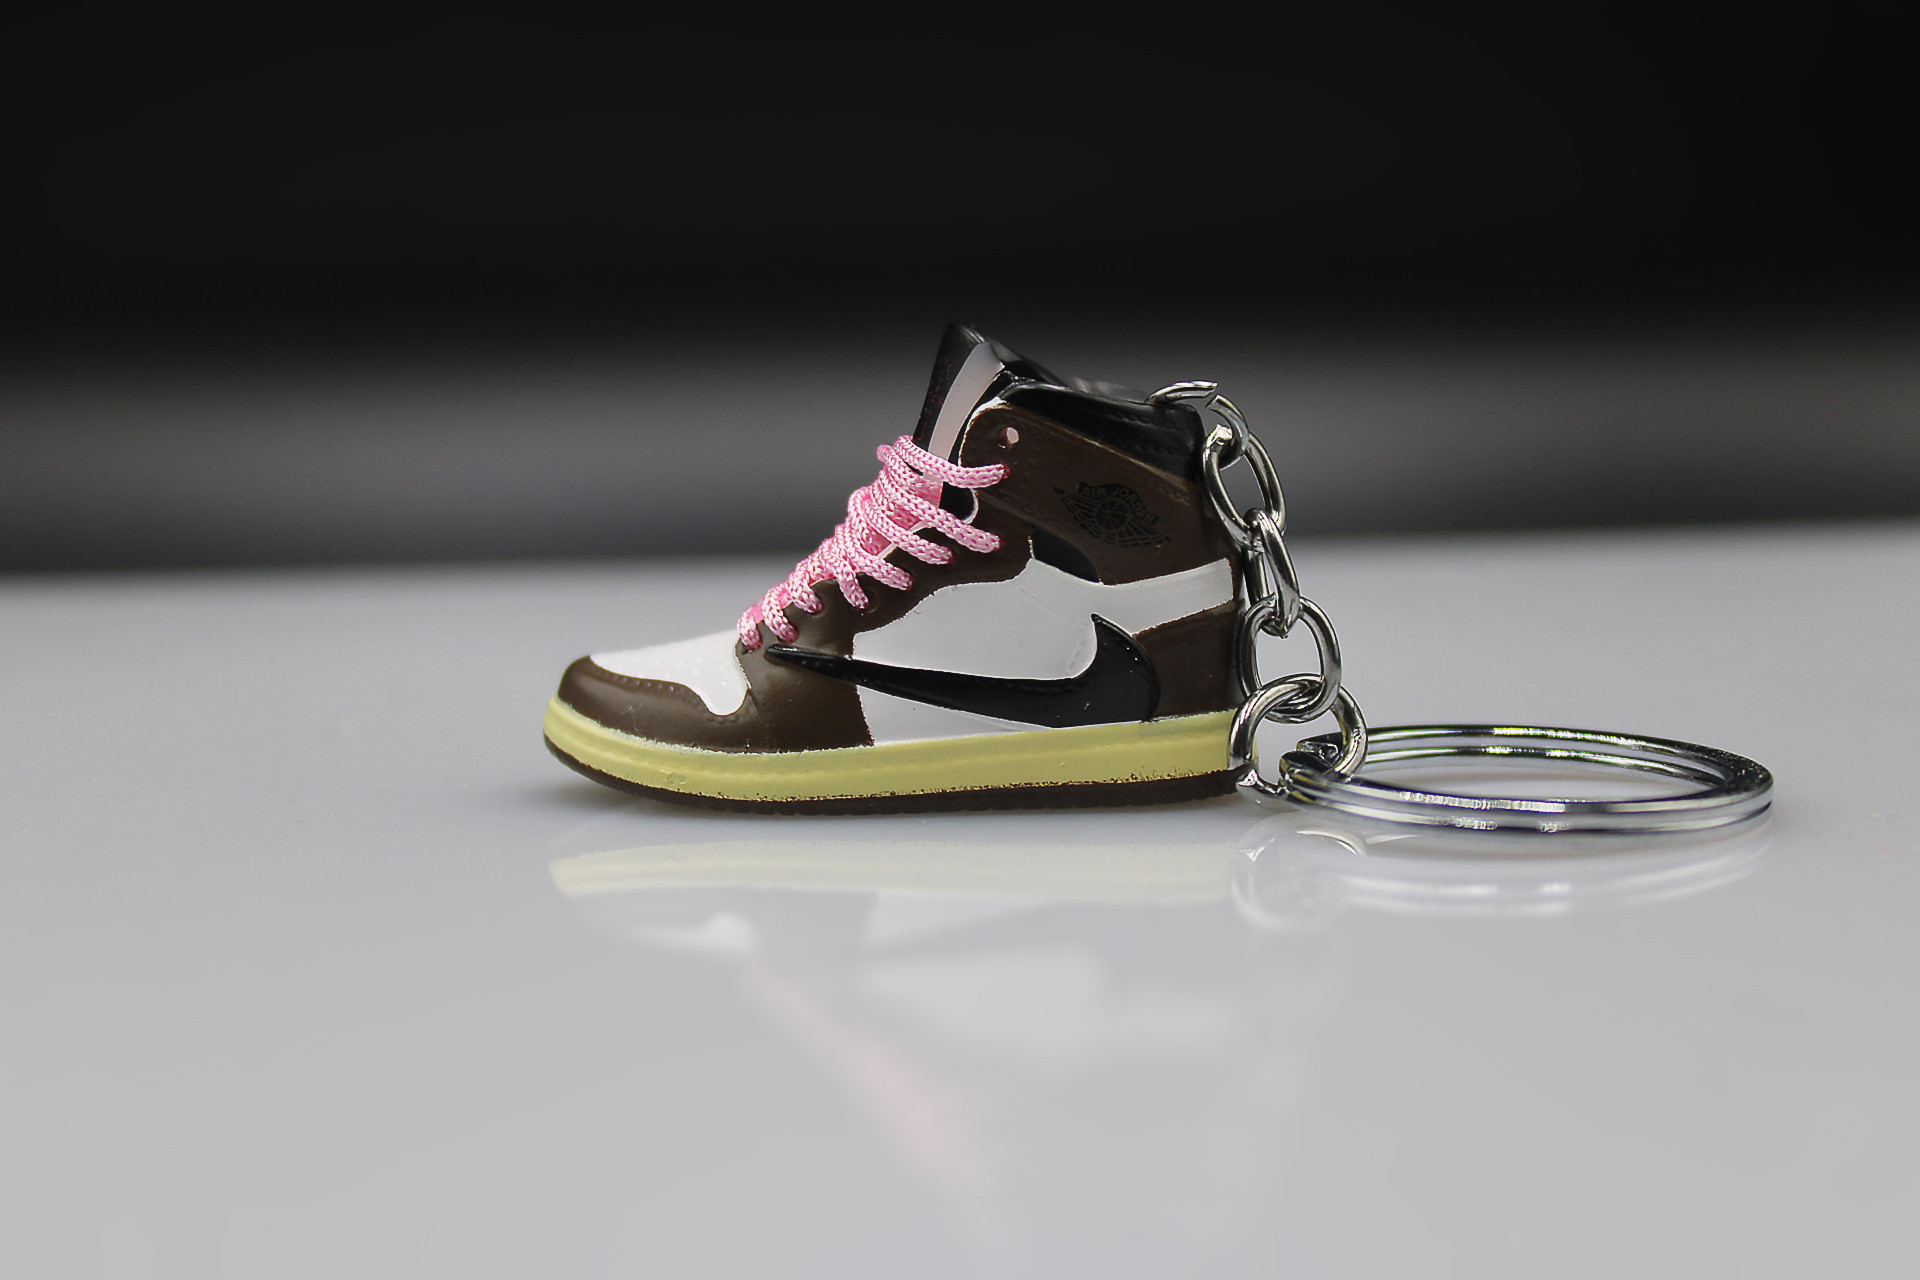 Porte-clés Sneakers 3D - Air Jordan 1 Retro High - Cactus Jack Rose